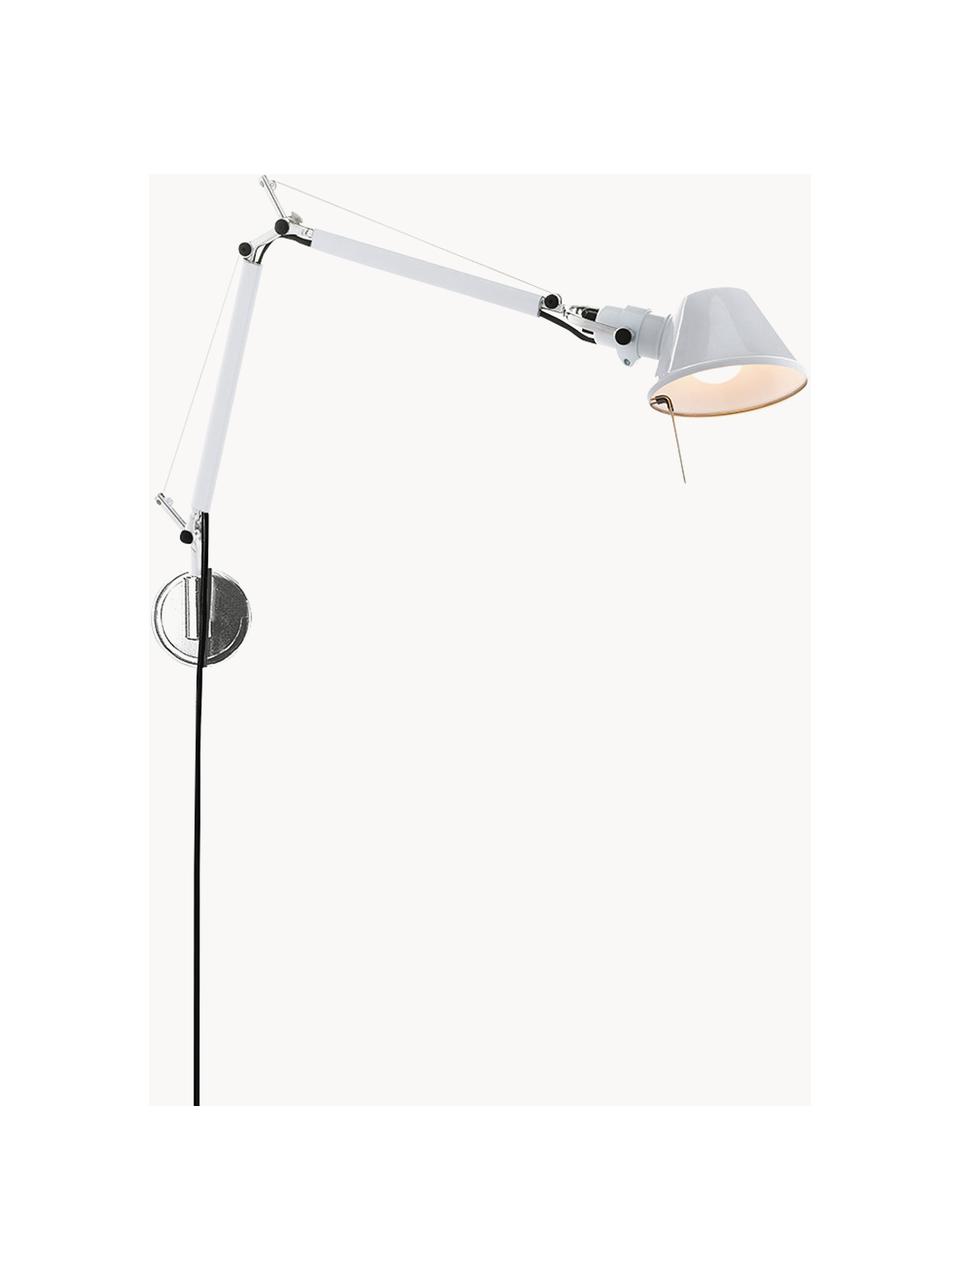 Grote verstelbare wandlamp Tolomeo Micro met stekker, Wit, glanzend, B 49 - 73 x H 41 - 74 cm